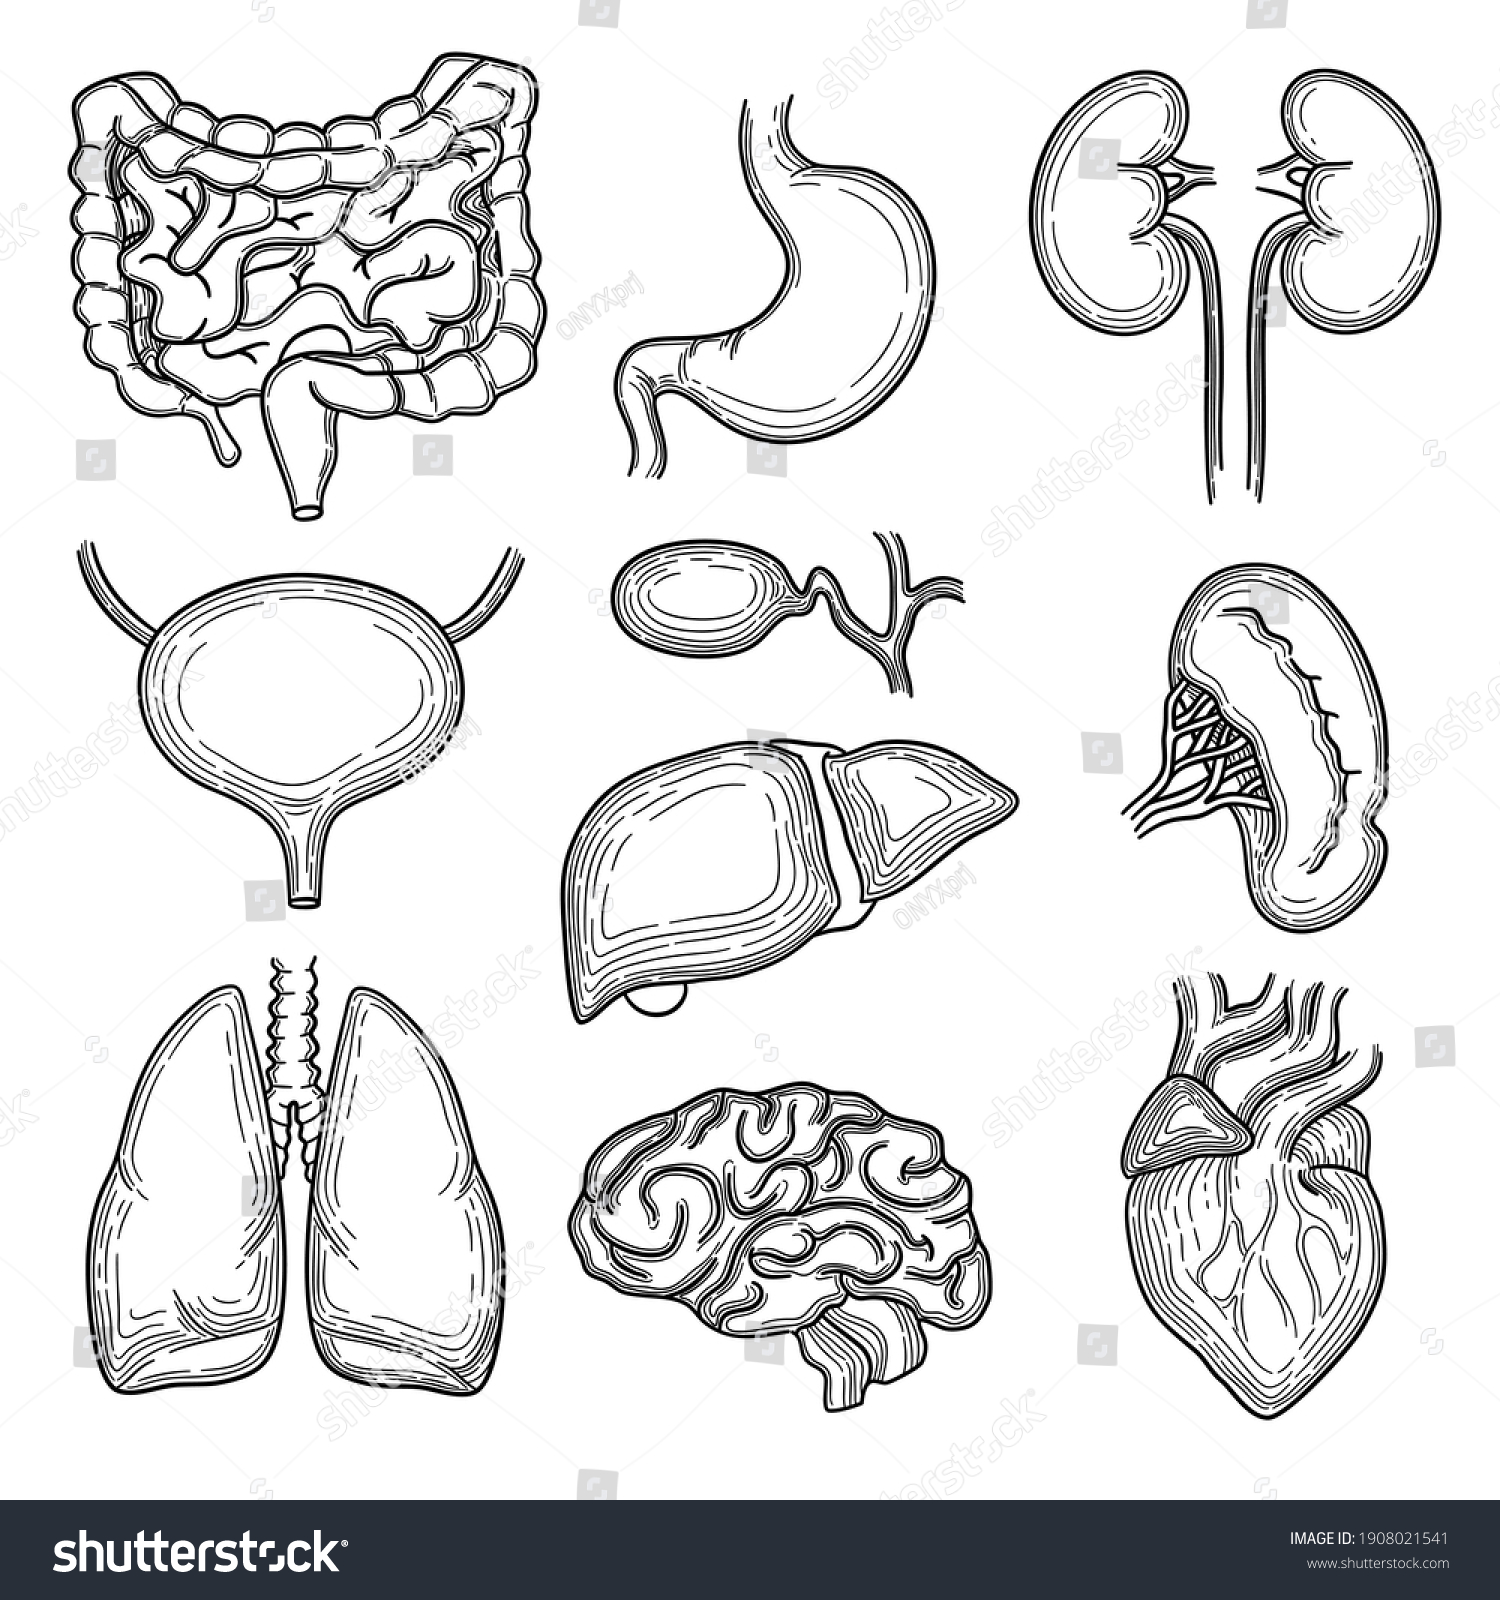 Human organs sketch Images, Stock Photos & Vectors Shutterstock